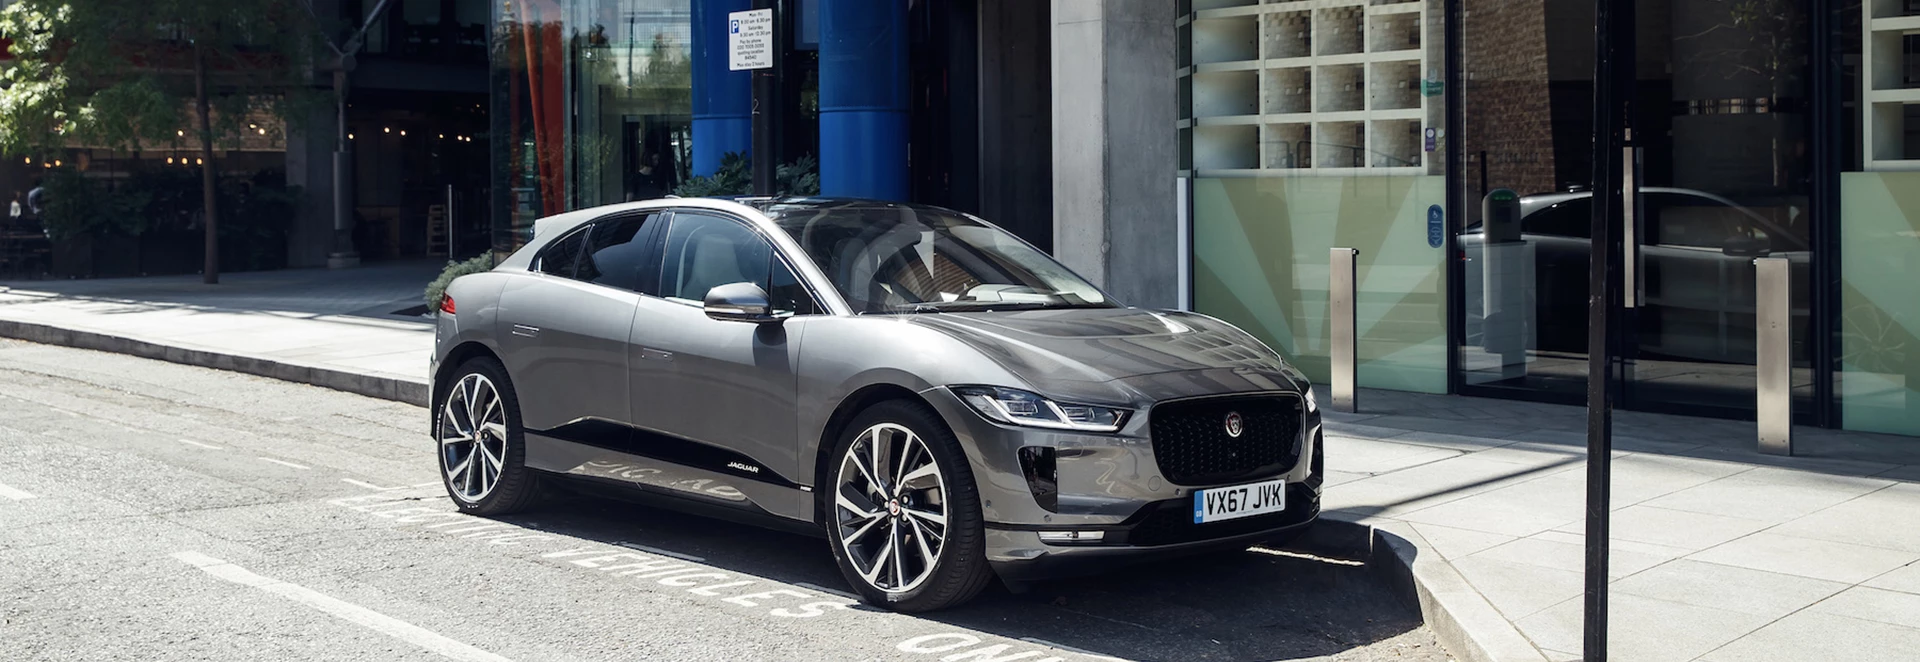 Jaguar announces plans to build electrified new models in the UK